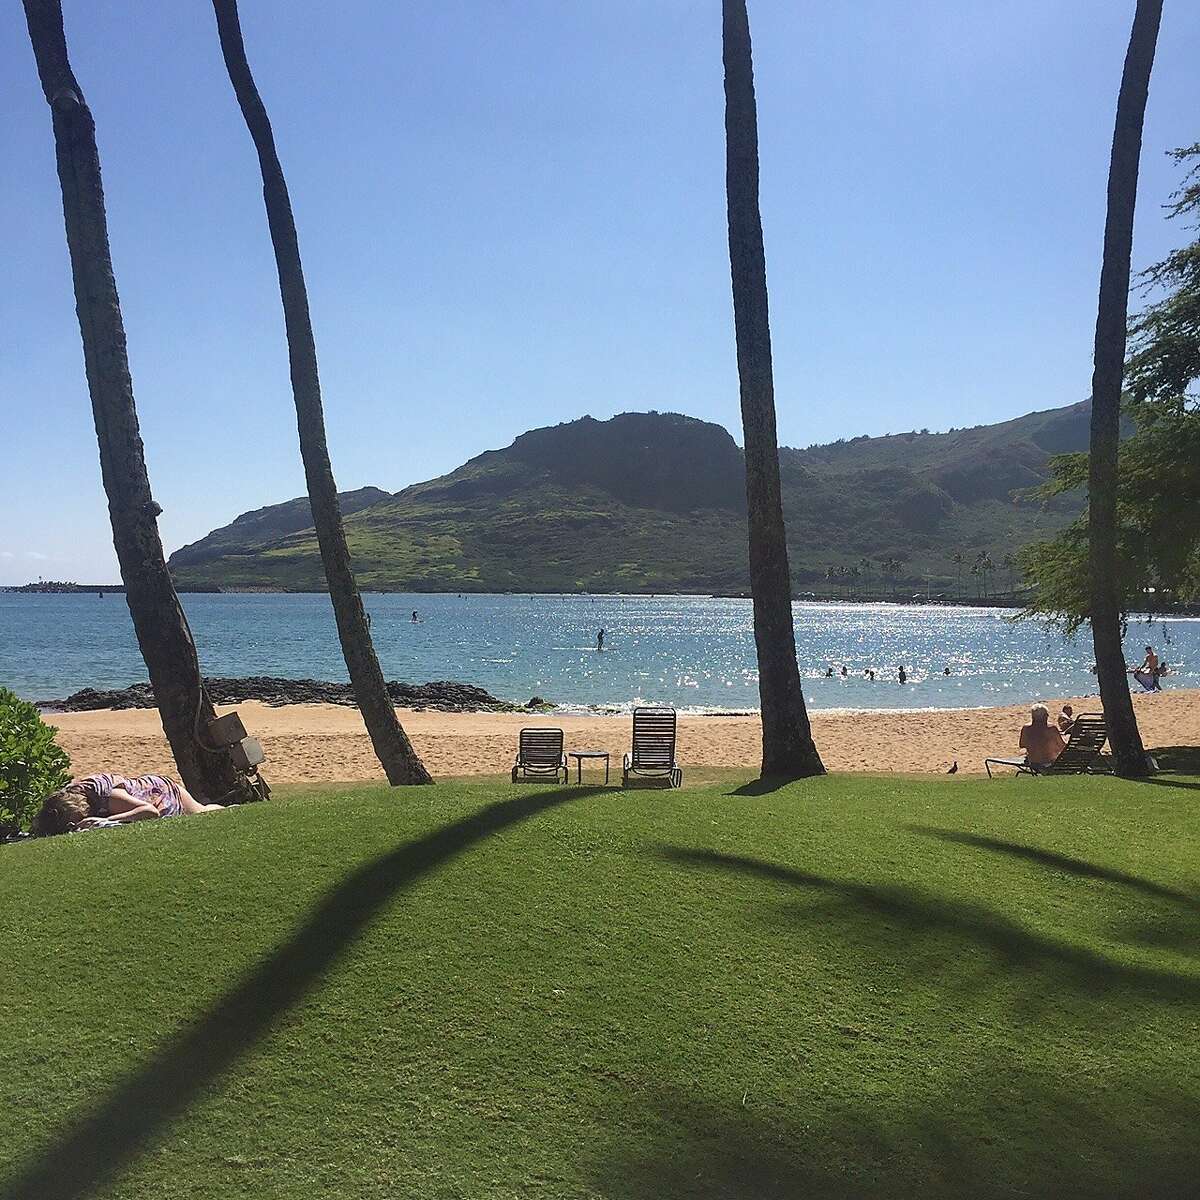 Palm trees and the beach Nawiliwili, Hawaii on a winter's day